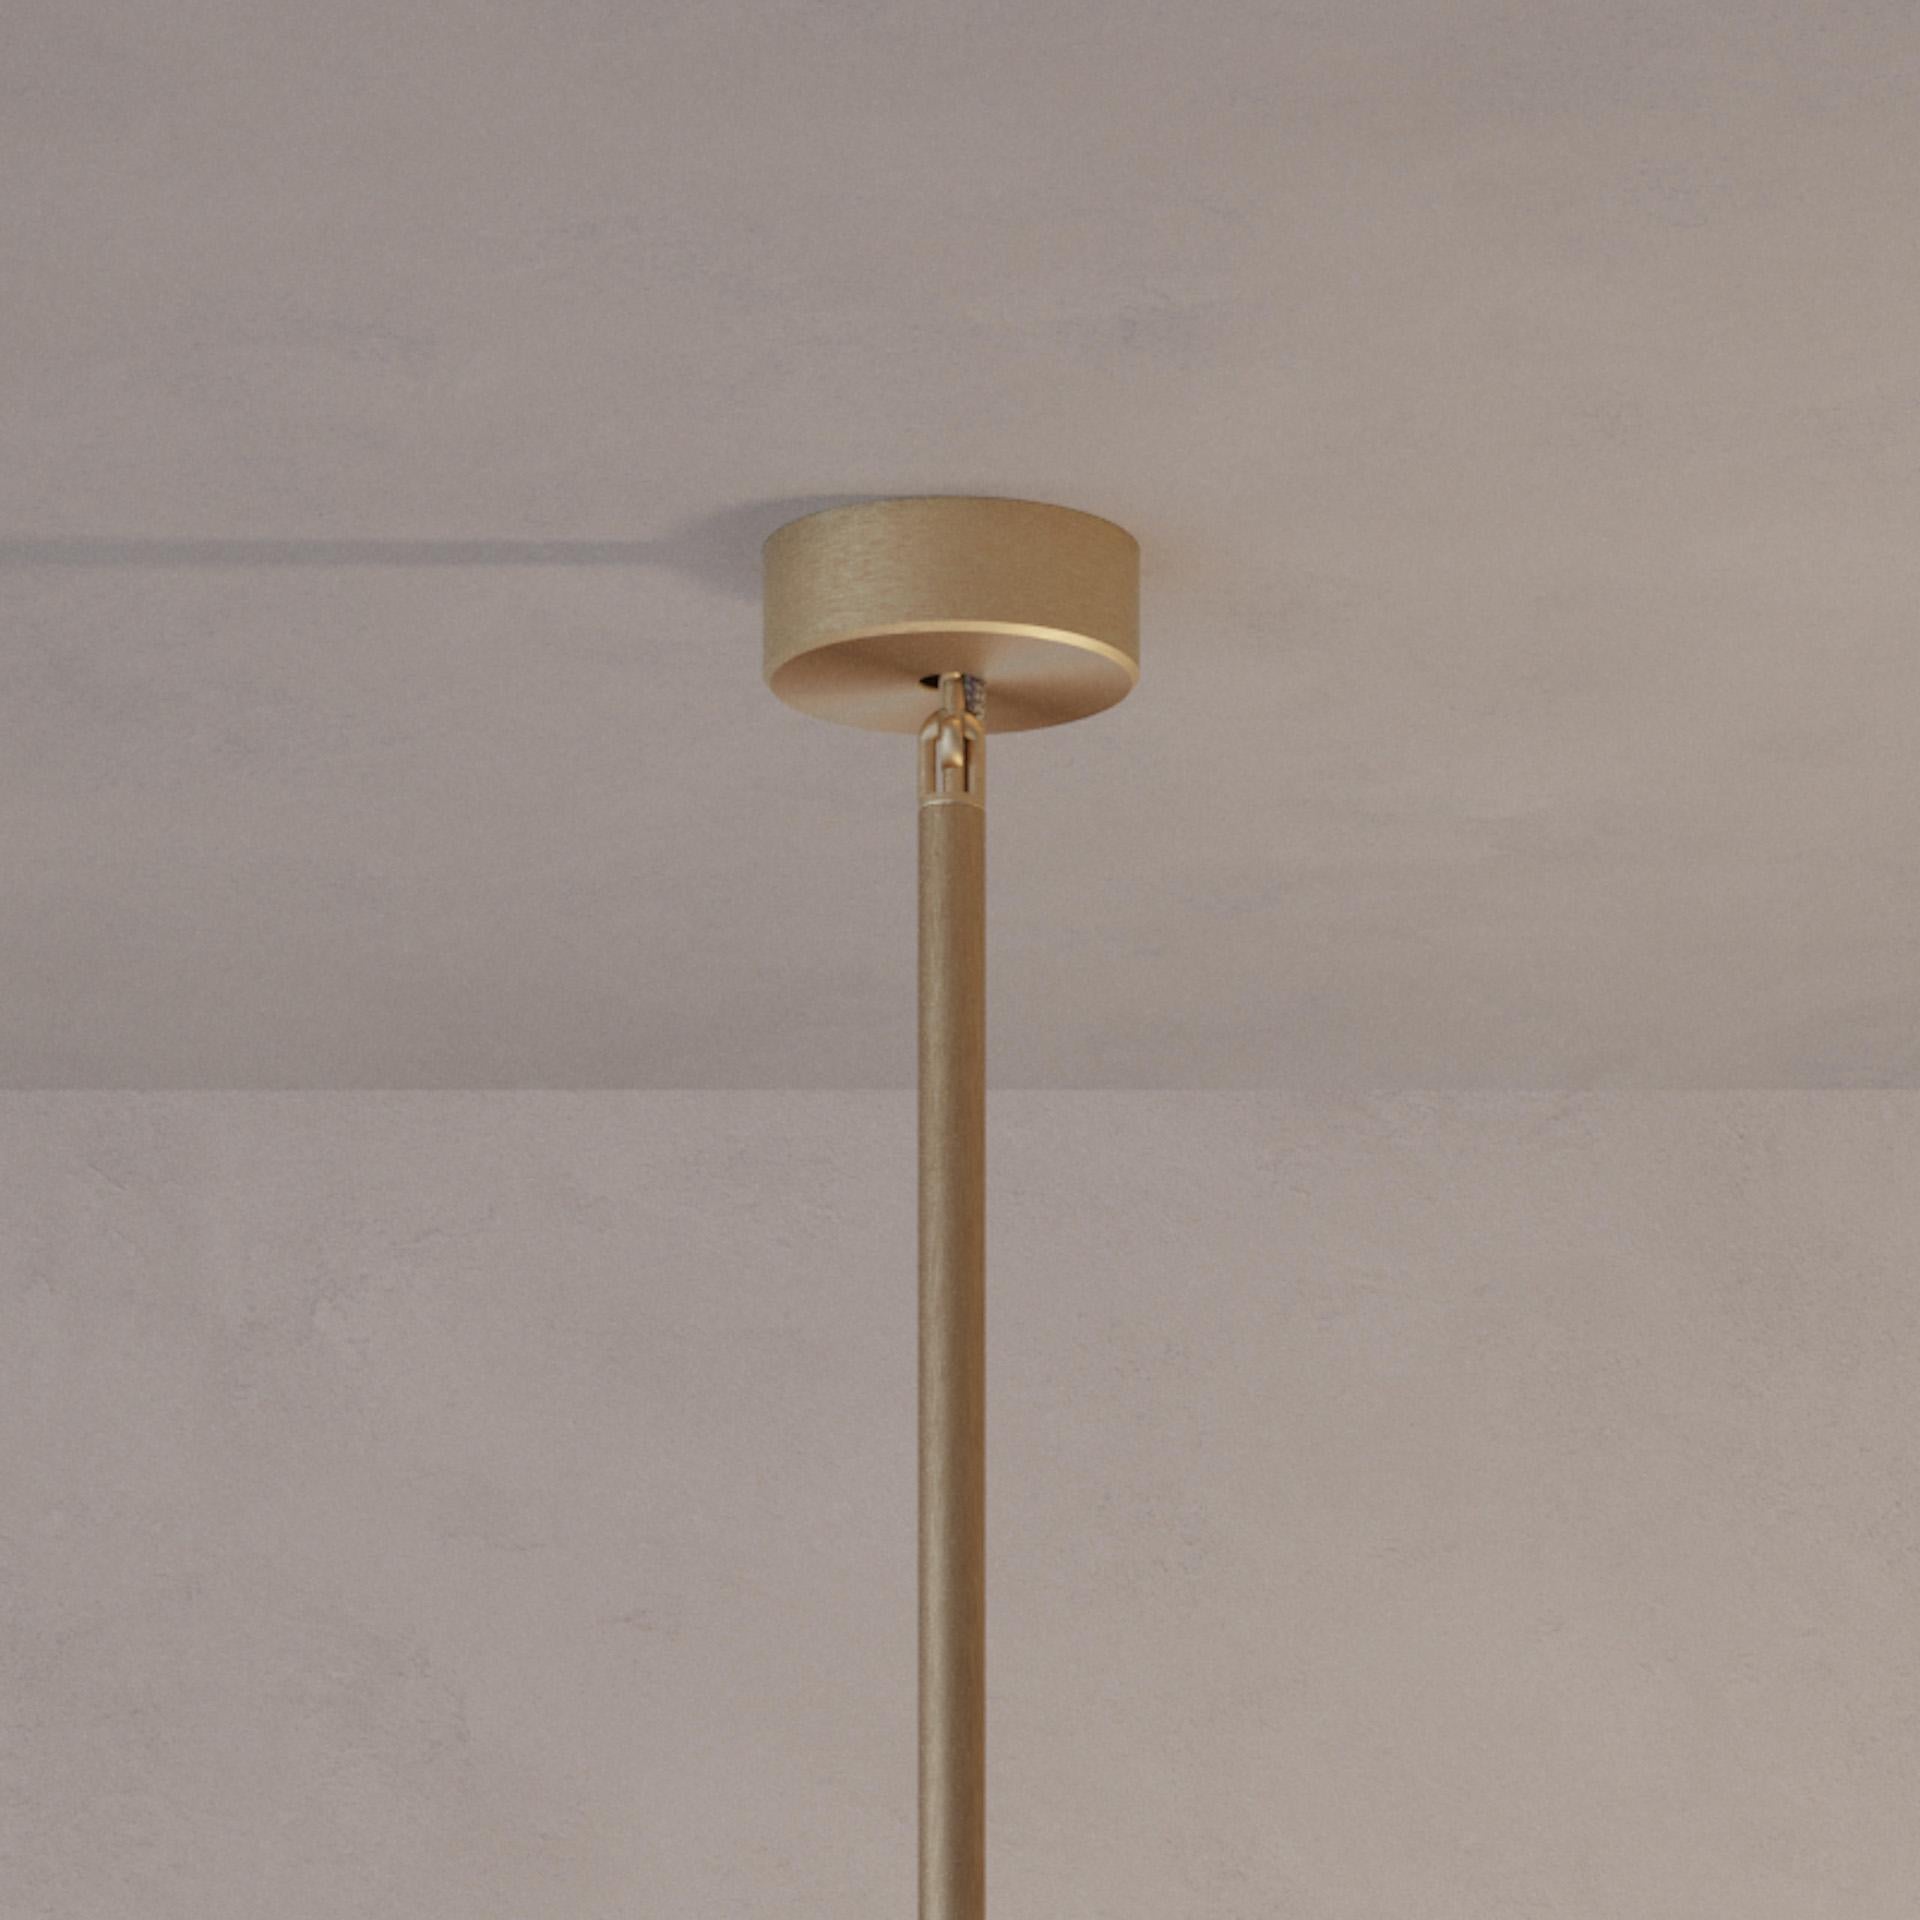 Brass Orbit Trio Purion XL Ceiling Light by Atelier001